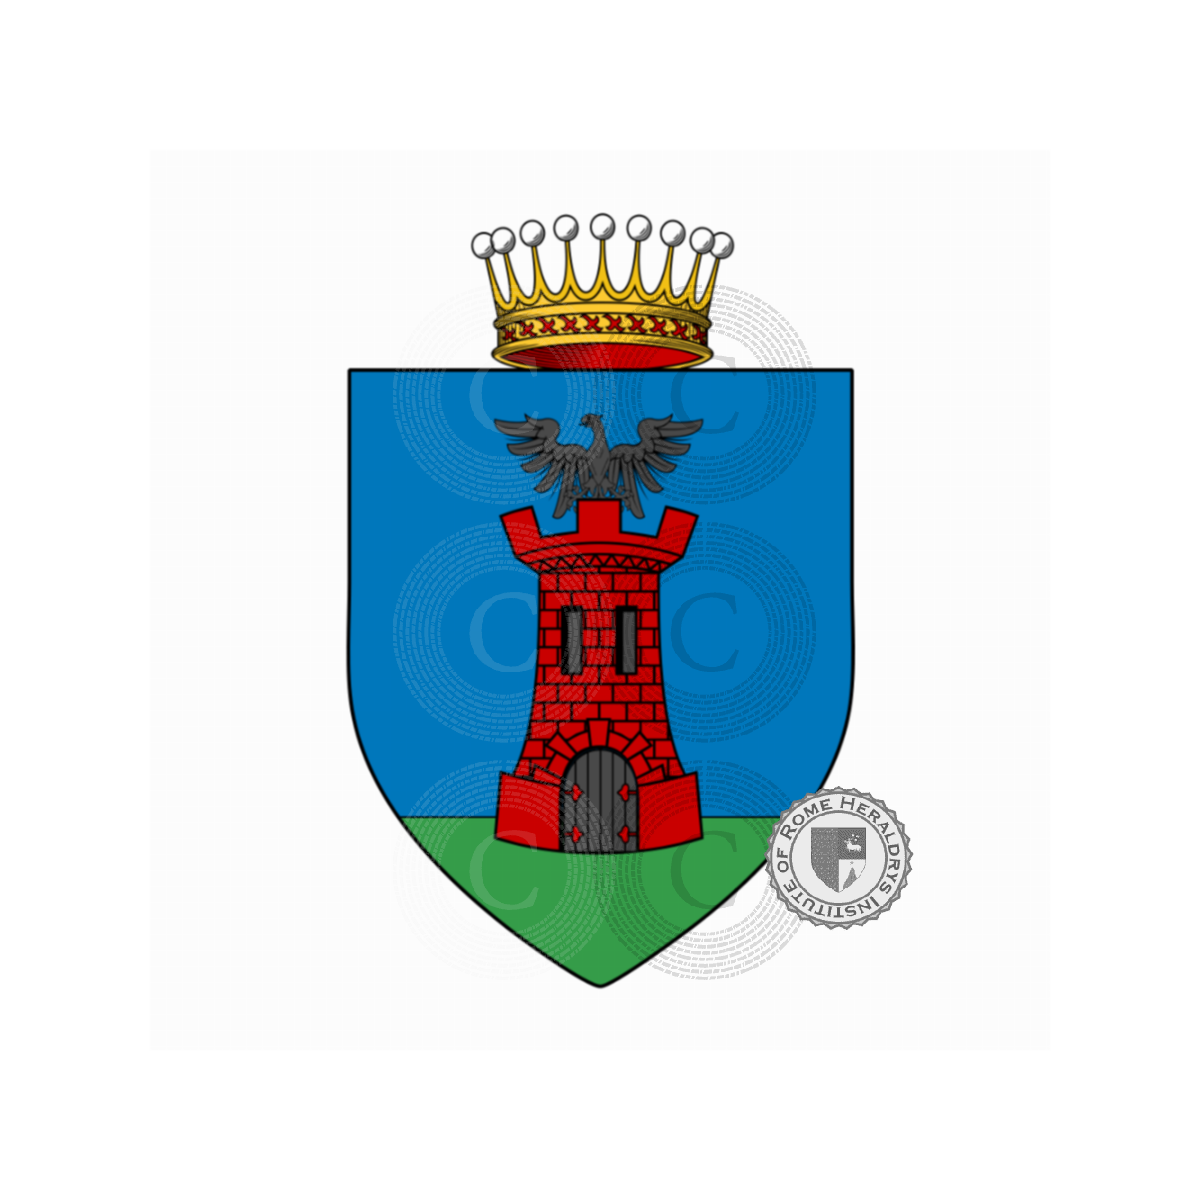 Wappen der FamilieCasale de Bustis y Figoroa, de Bustis,Ficarola,Figoroa